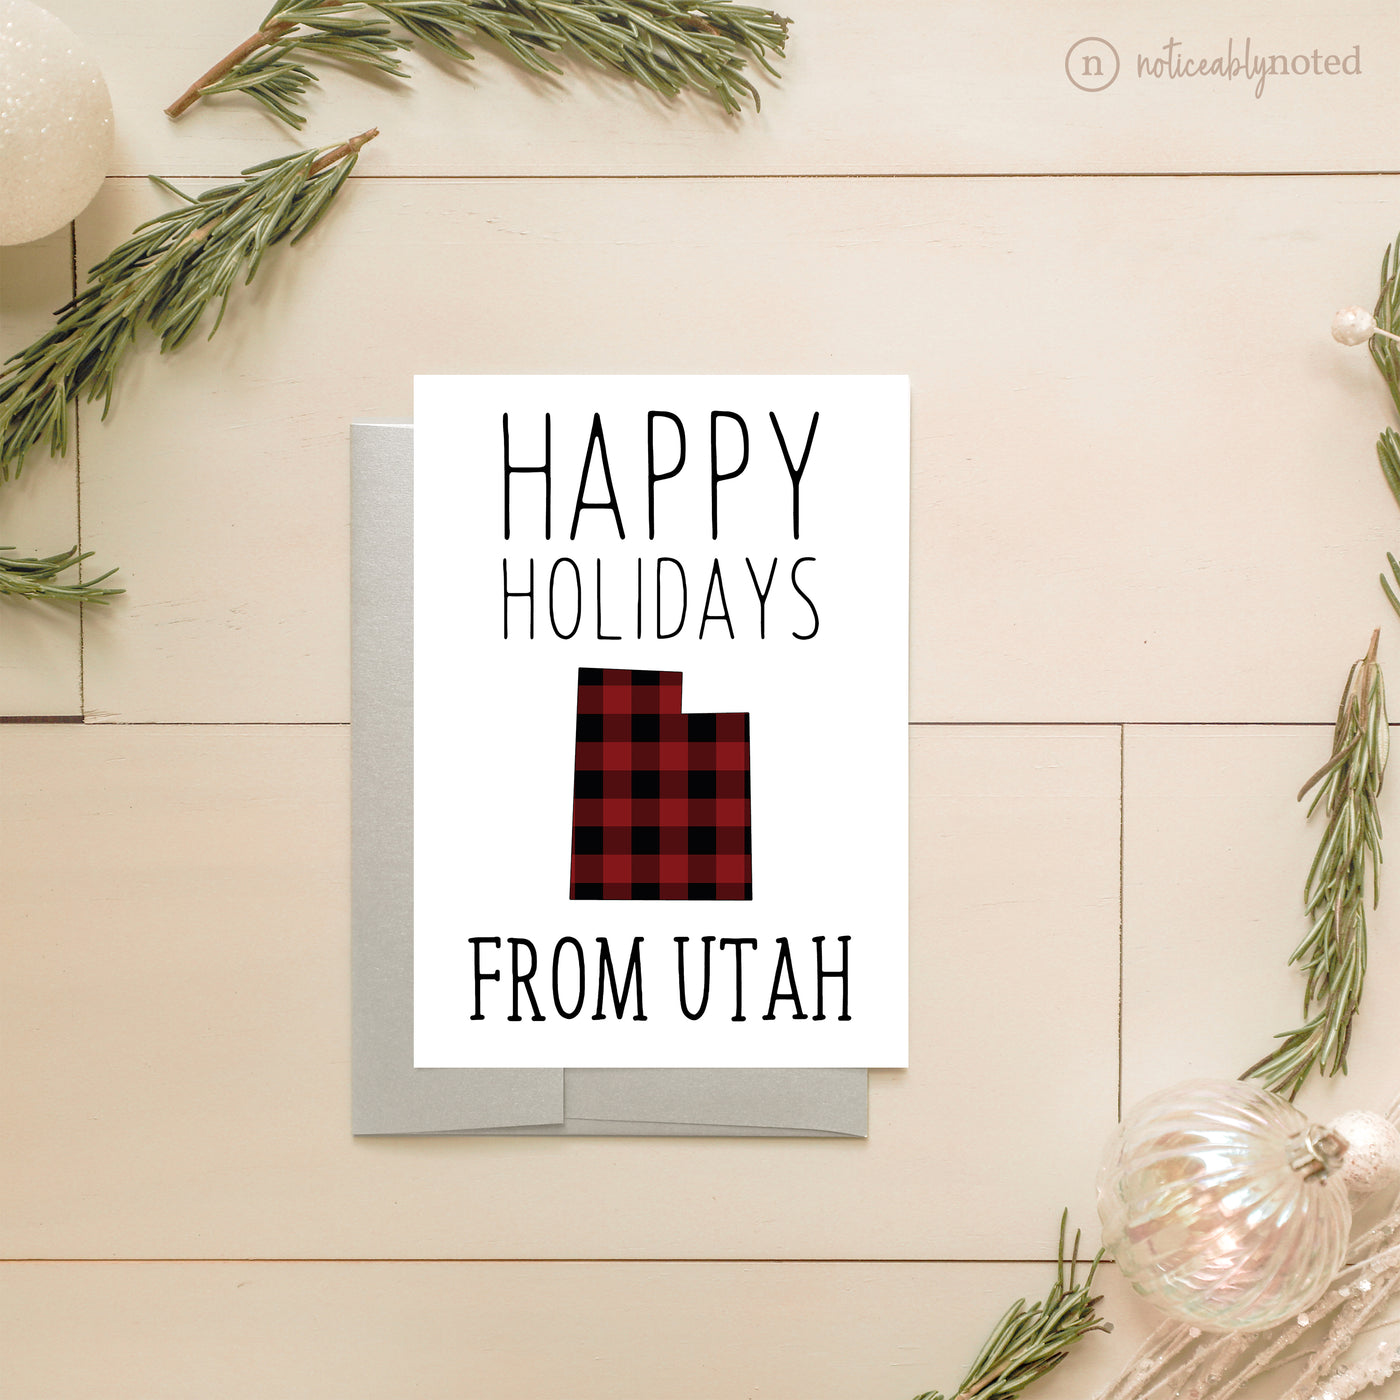 Utah Holiday Card - Happy Holidays | Noticeably Noted